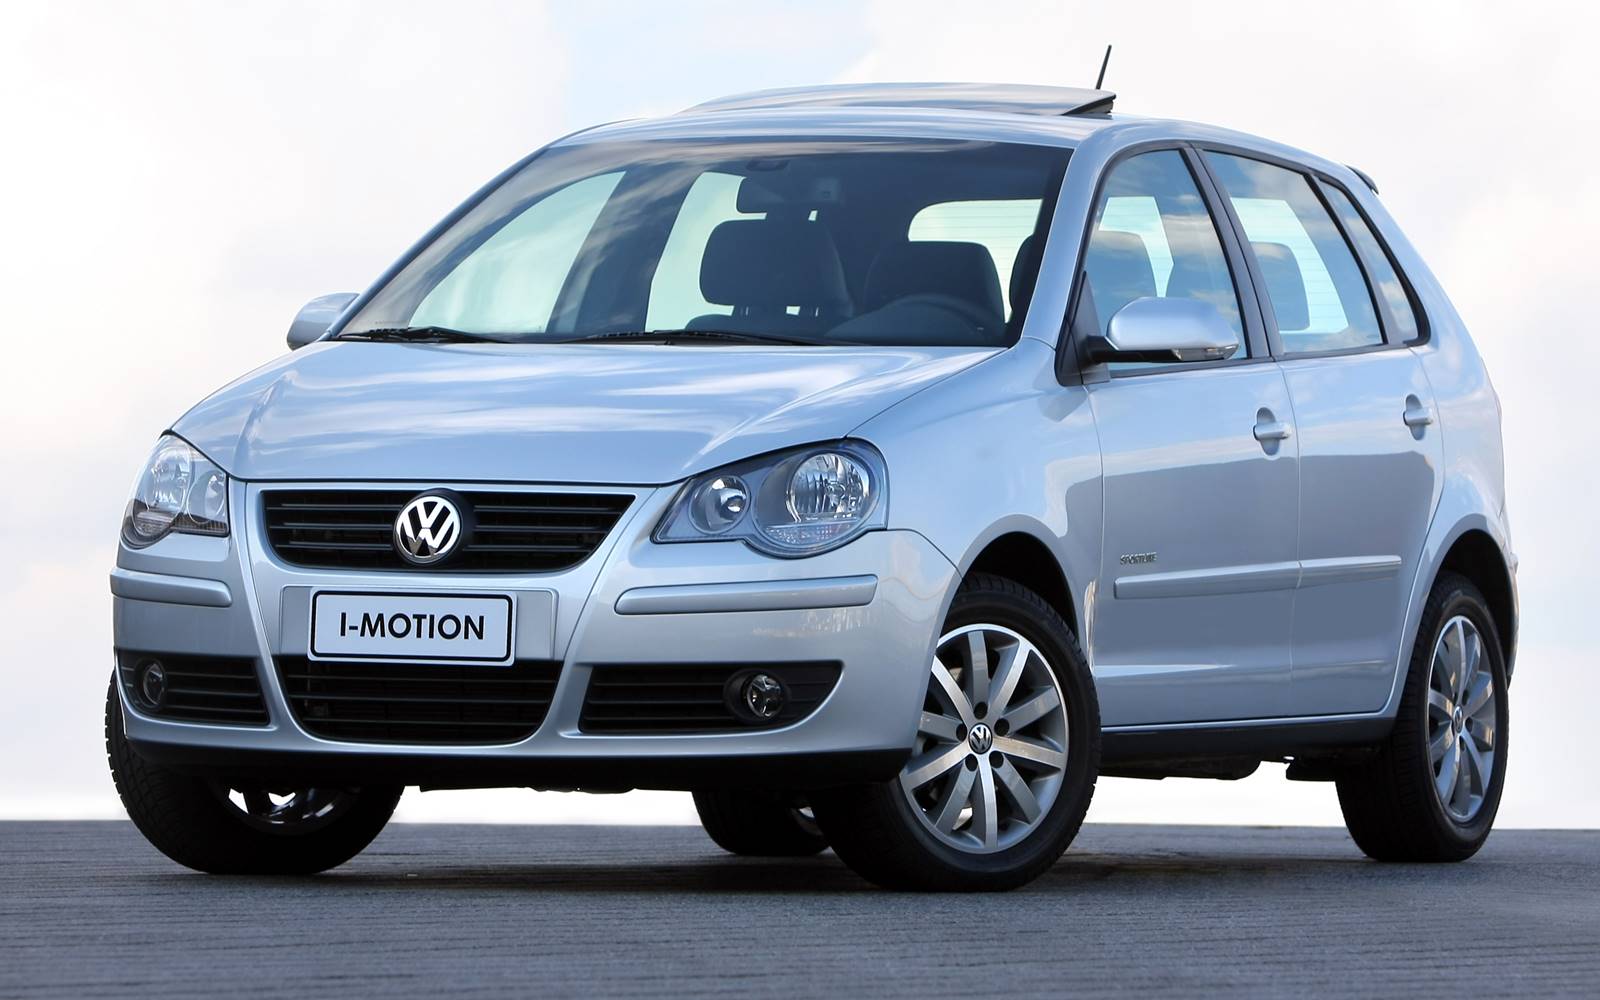 Volkswagen Polo I-Motion 2010